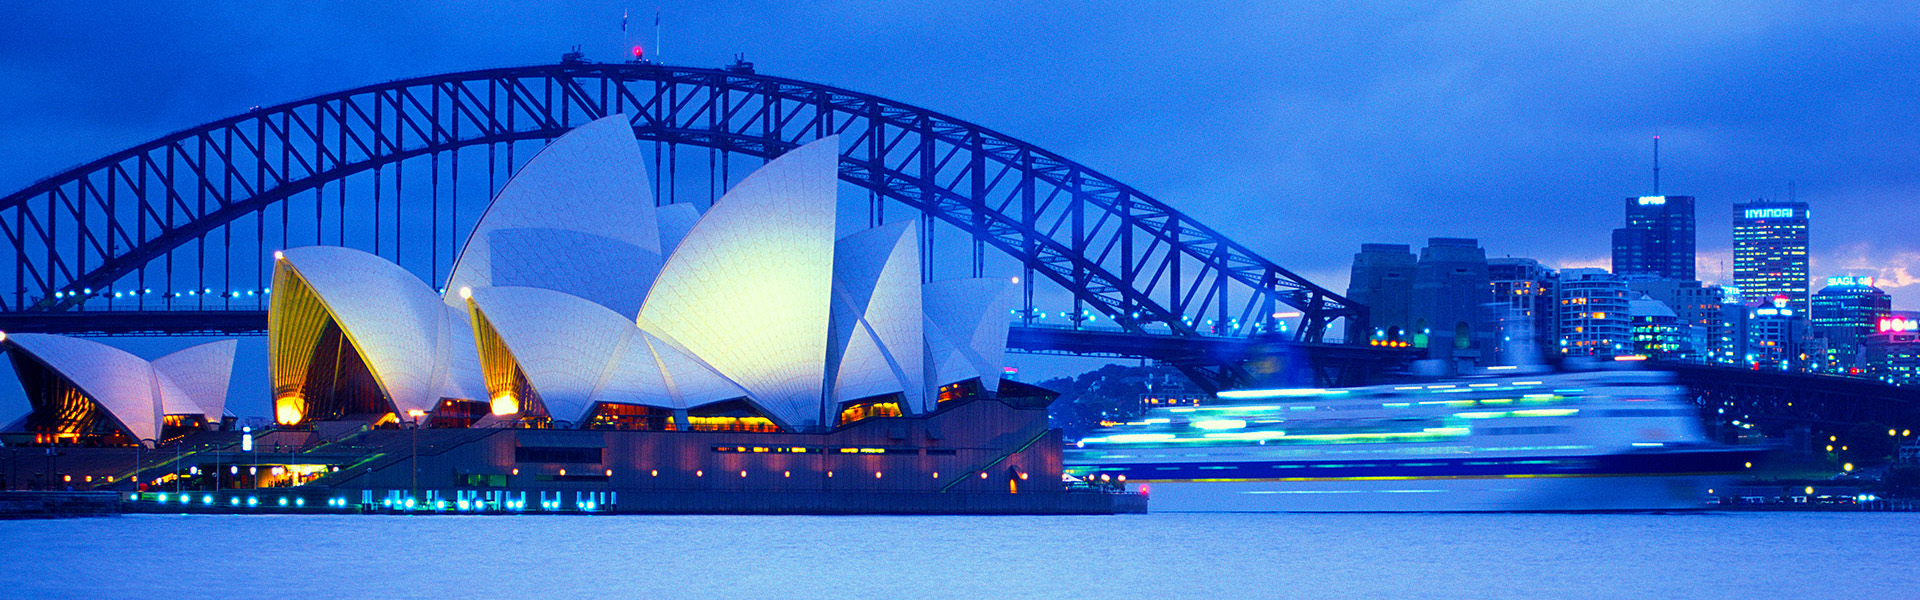 Sydney Opera Building, Harbour Bridge and passing cruise ship